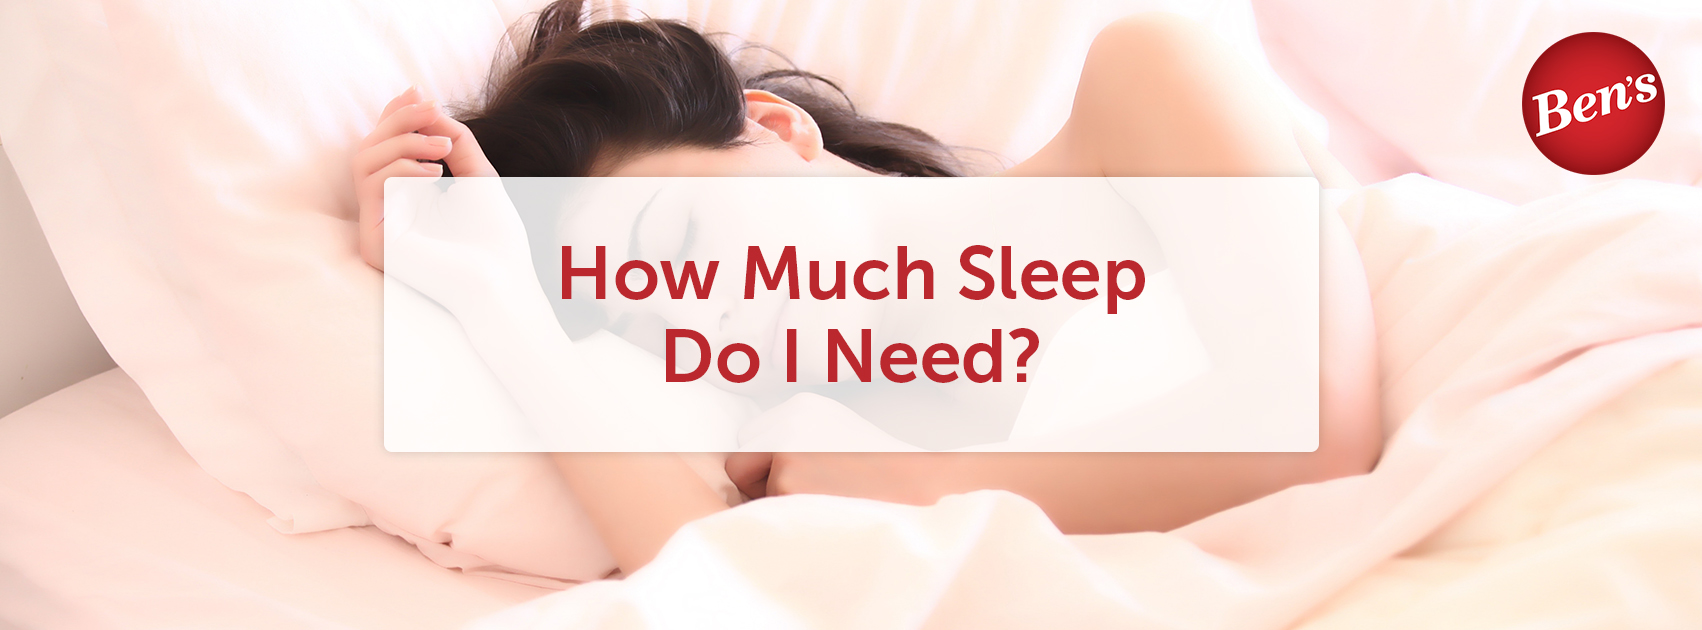 How much sleep do i need